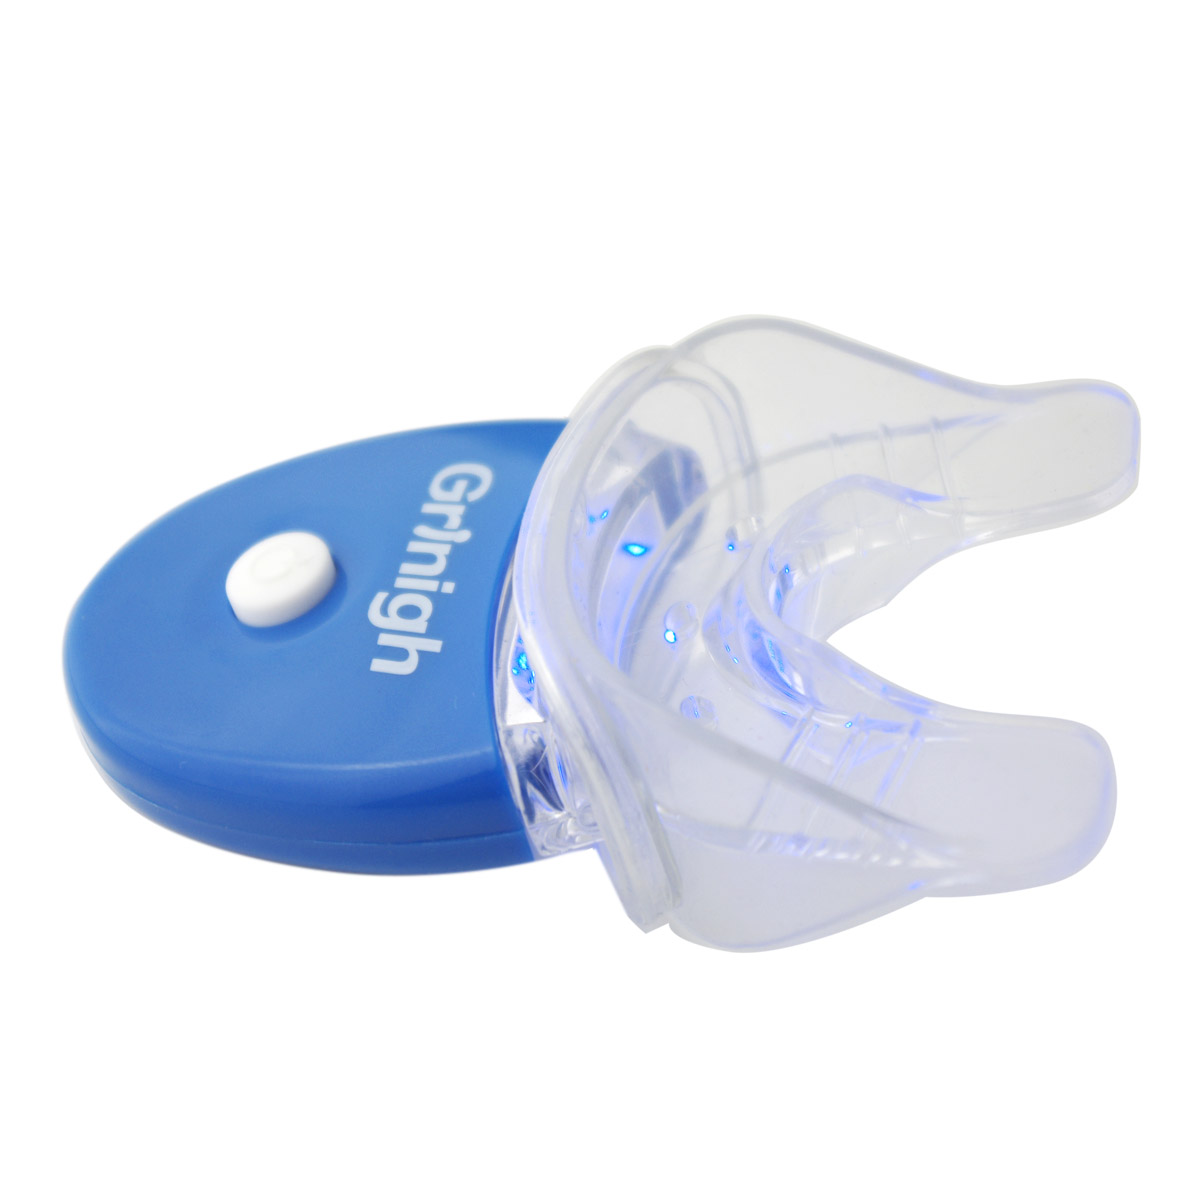 Grinigh 5 LED Teeth Whitening Accelerator Light met Attachable bitje - Koop Dental Supplies Online, Tanden bleken, Dental Tandheelkundige producten